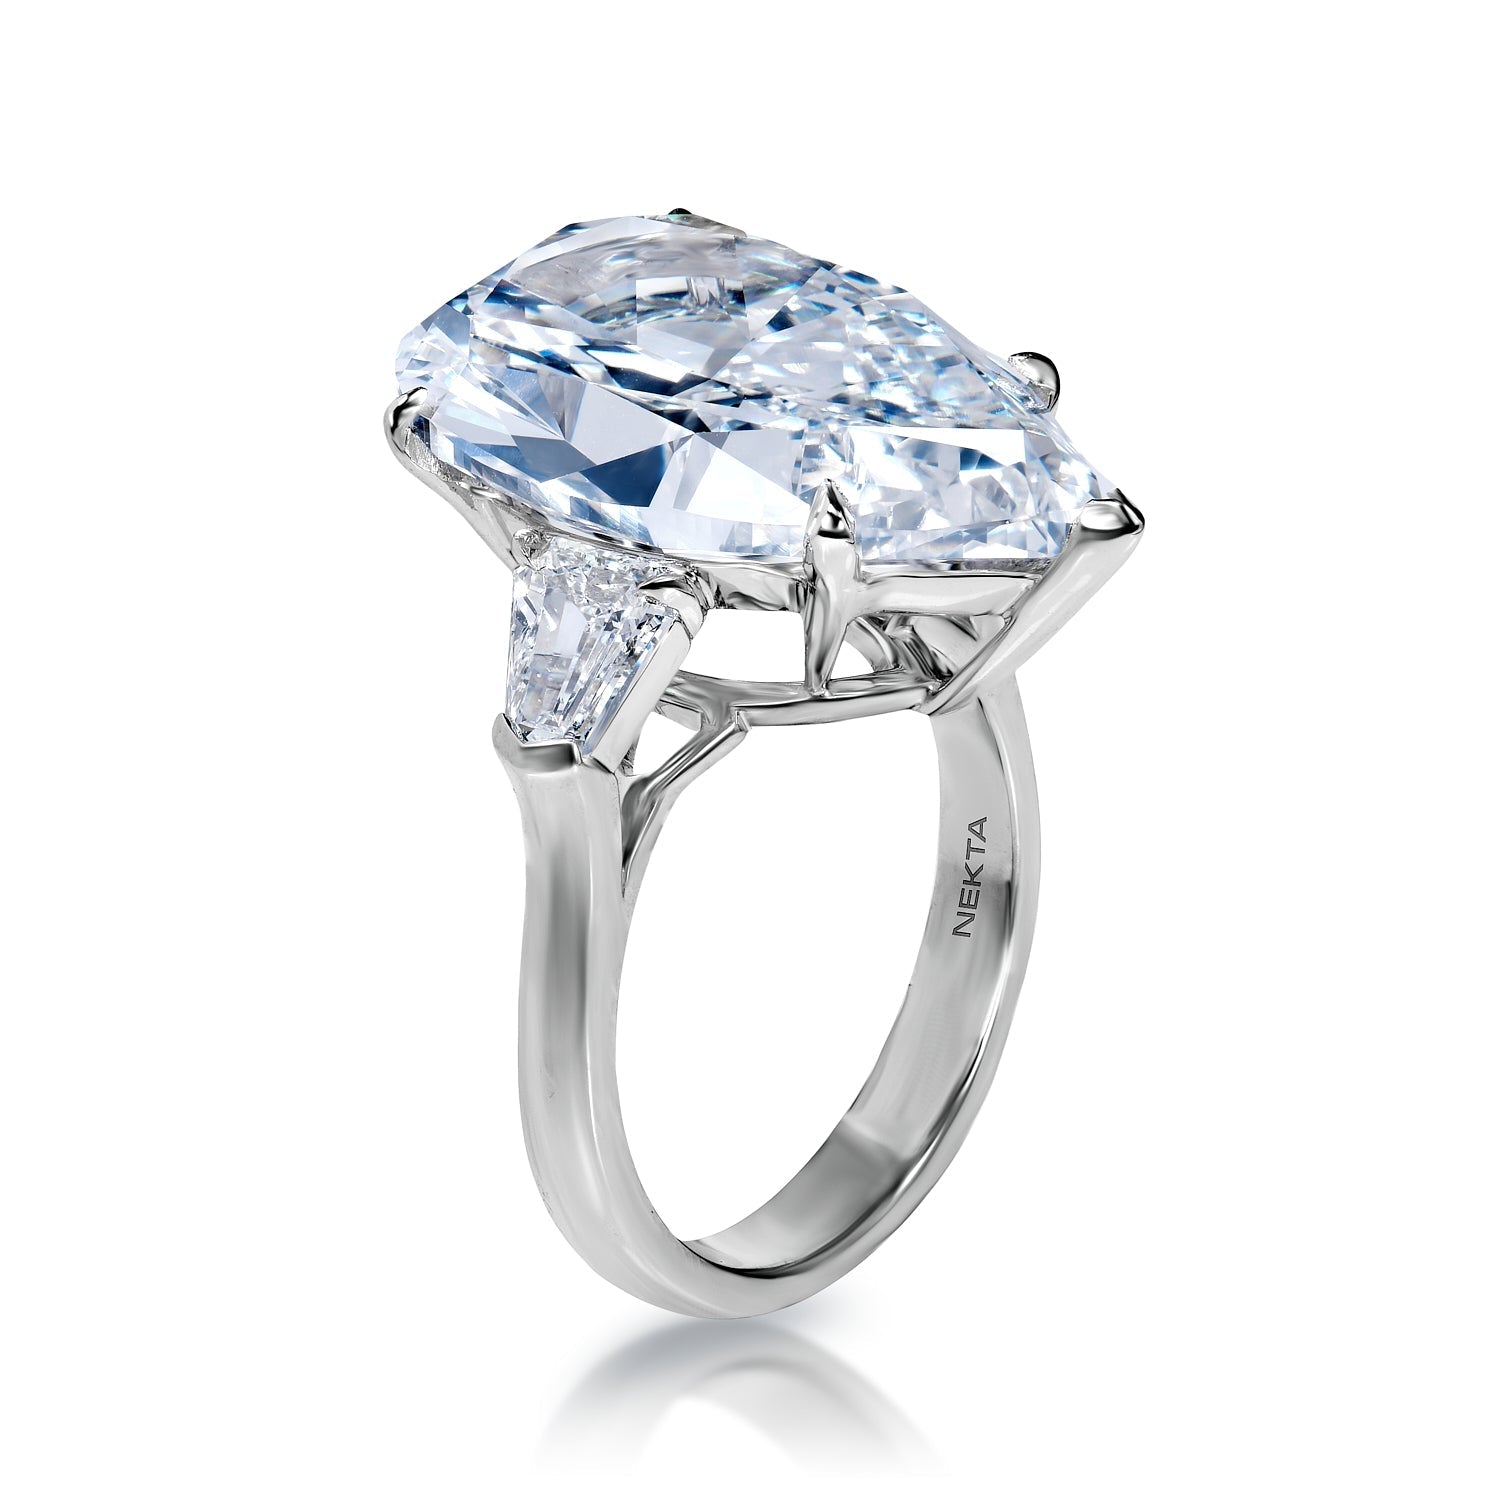 Stunning 15 Carat Diamond Ring that Set the Fashion Frenzy